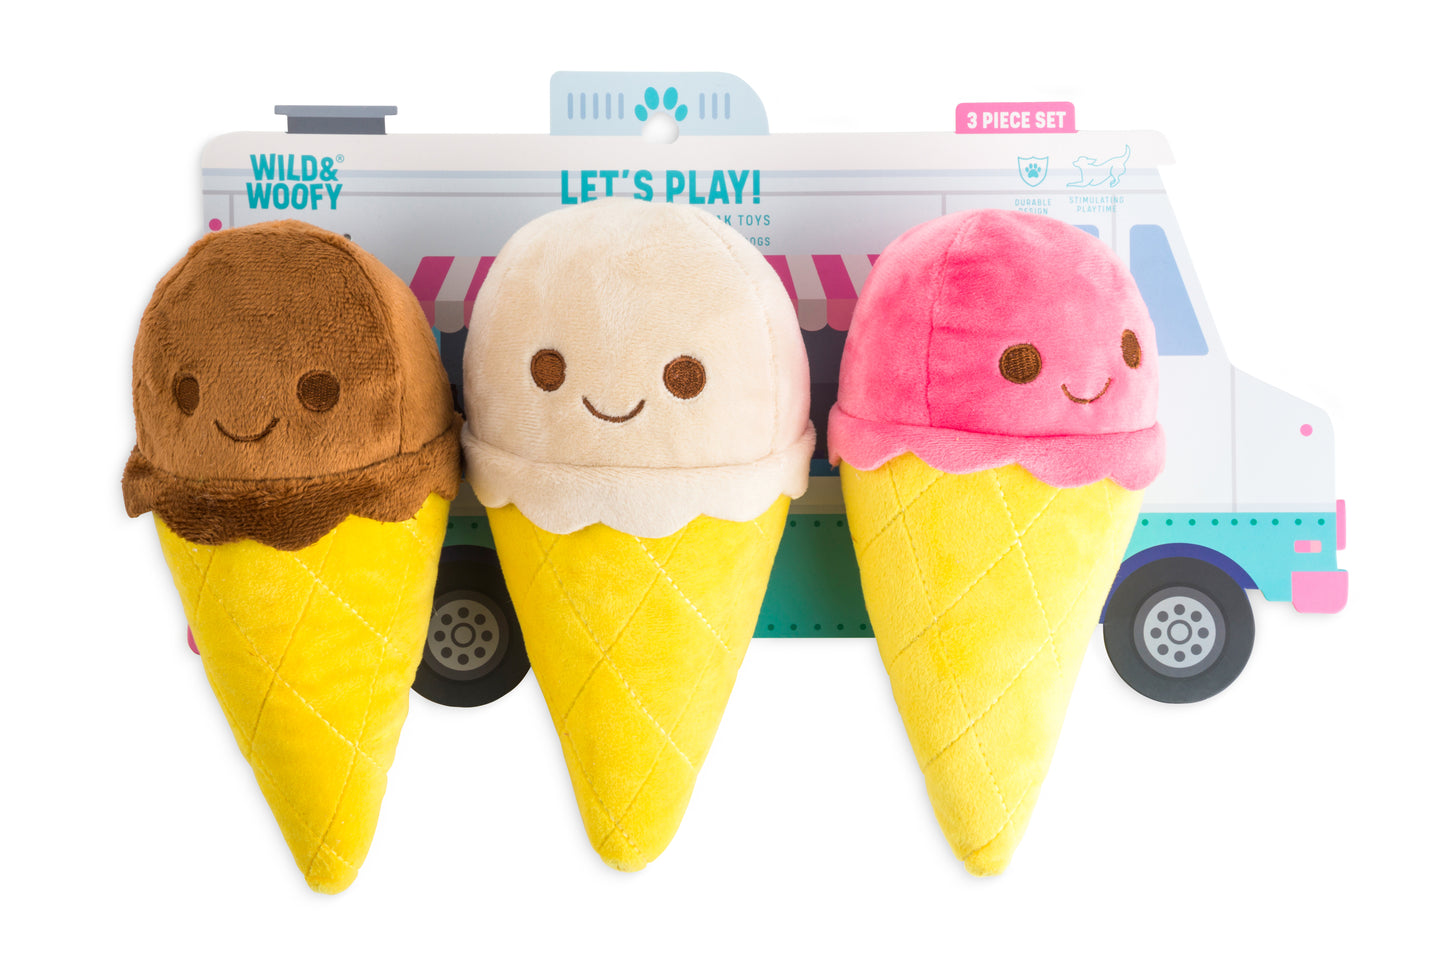 Three piece ice cream dog toy set in chocolate, vanilla and strawberry cones